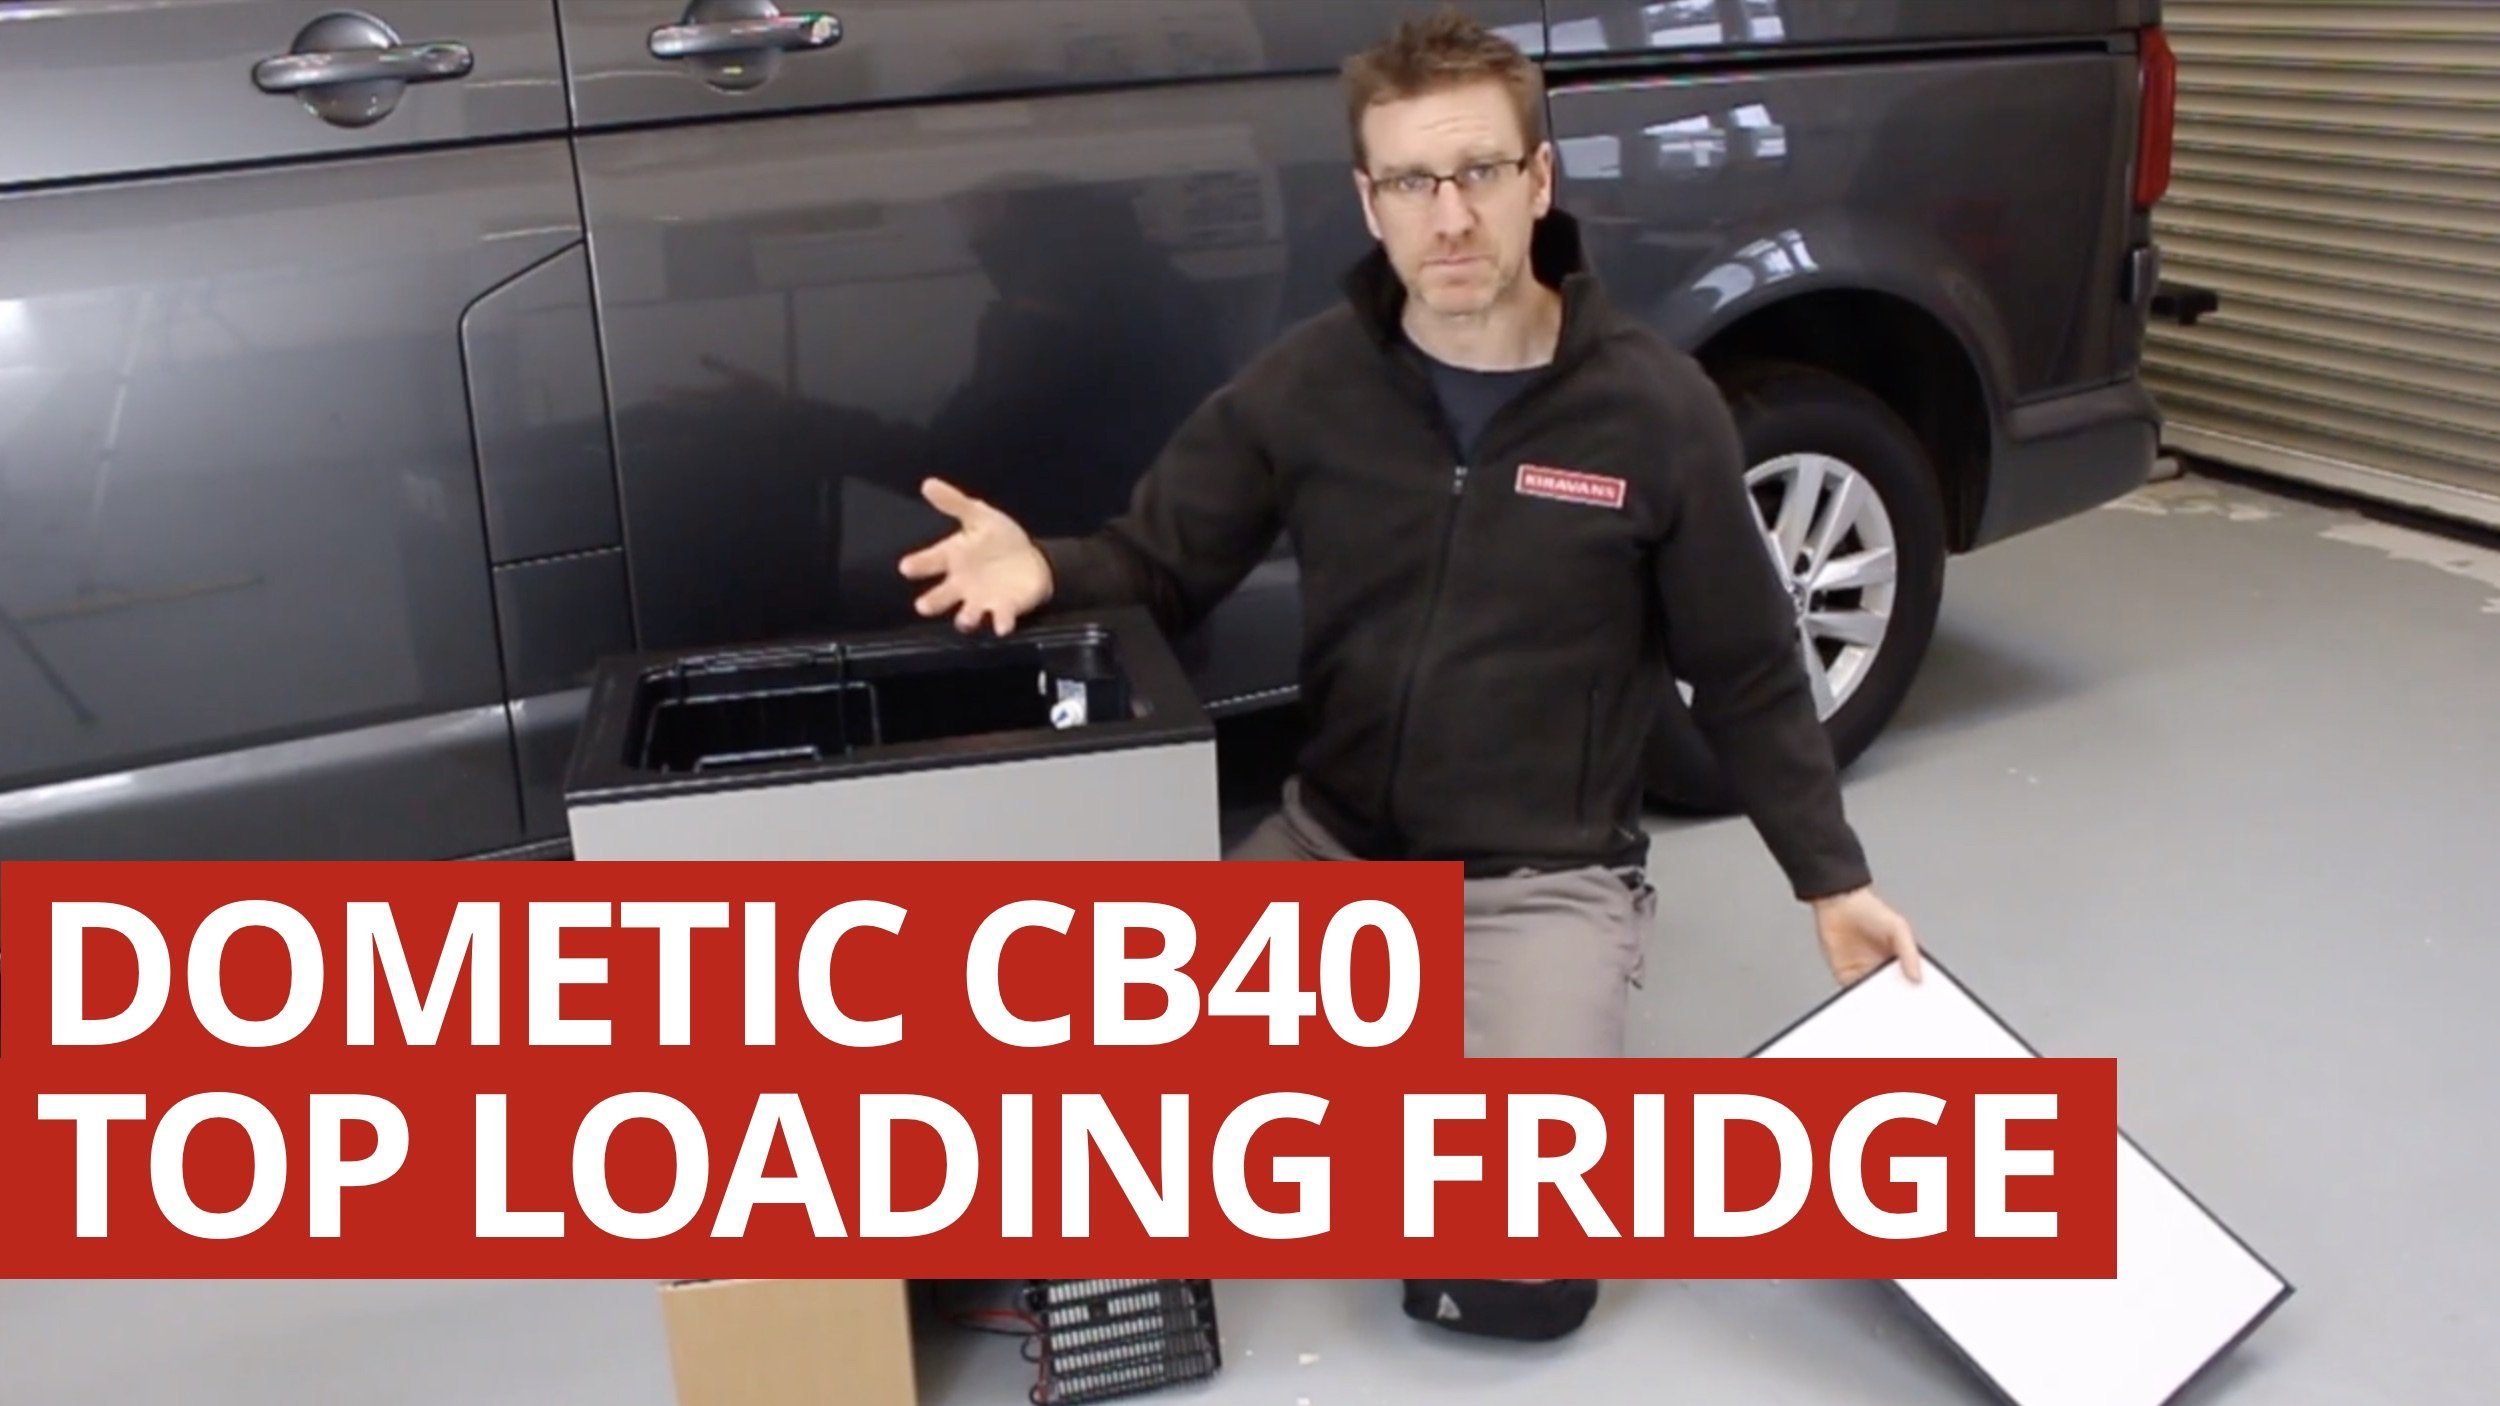 Video: CB40 Top Loading Fridge